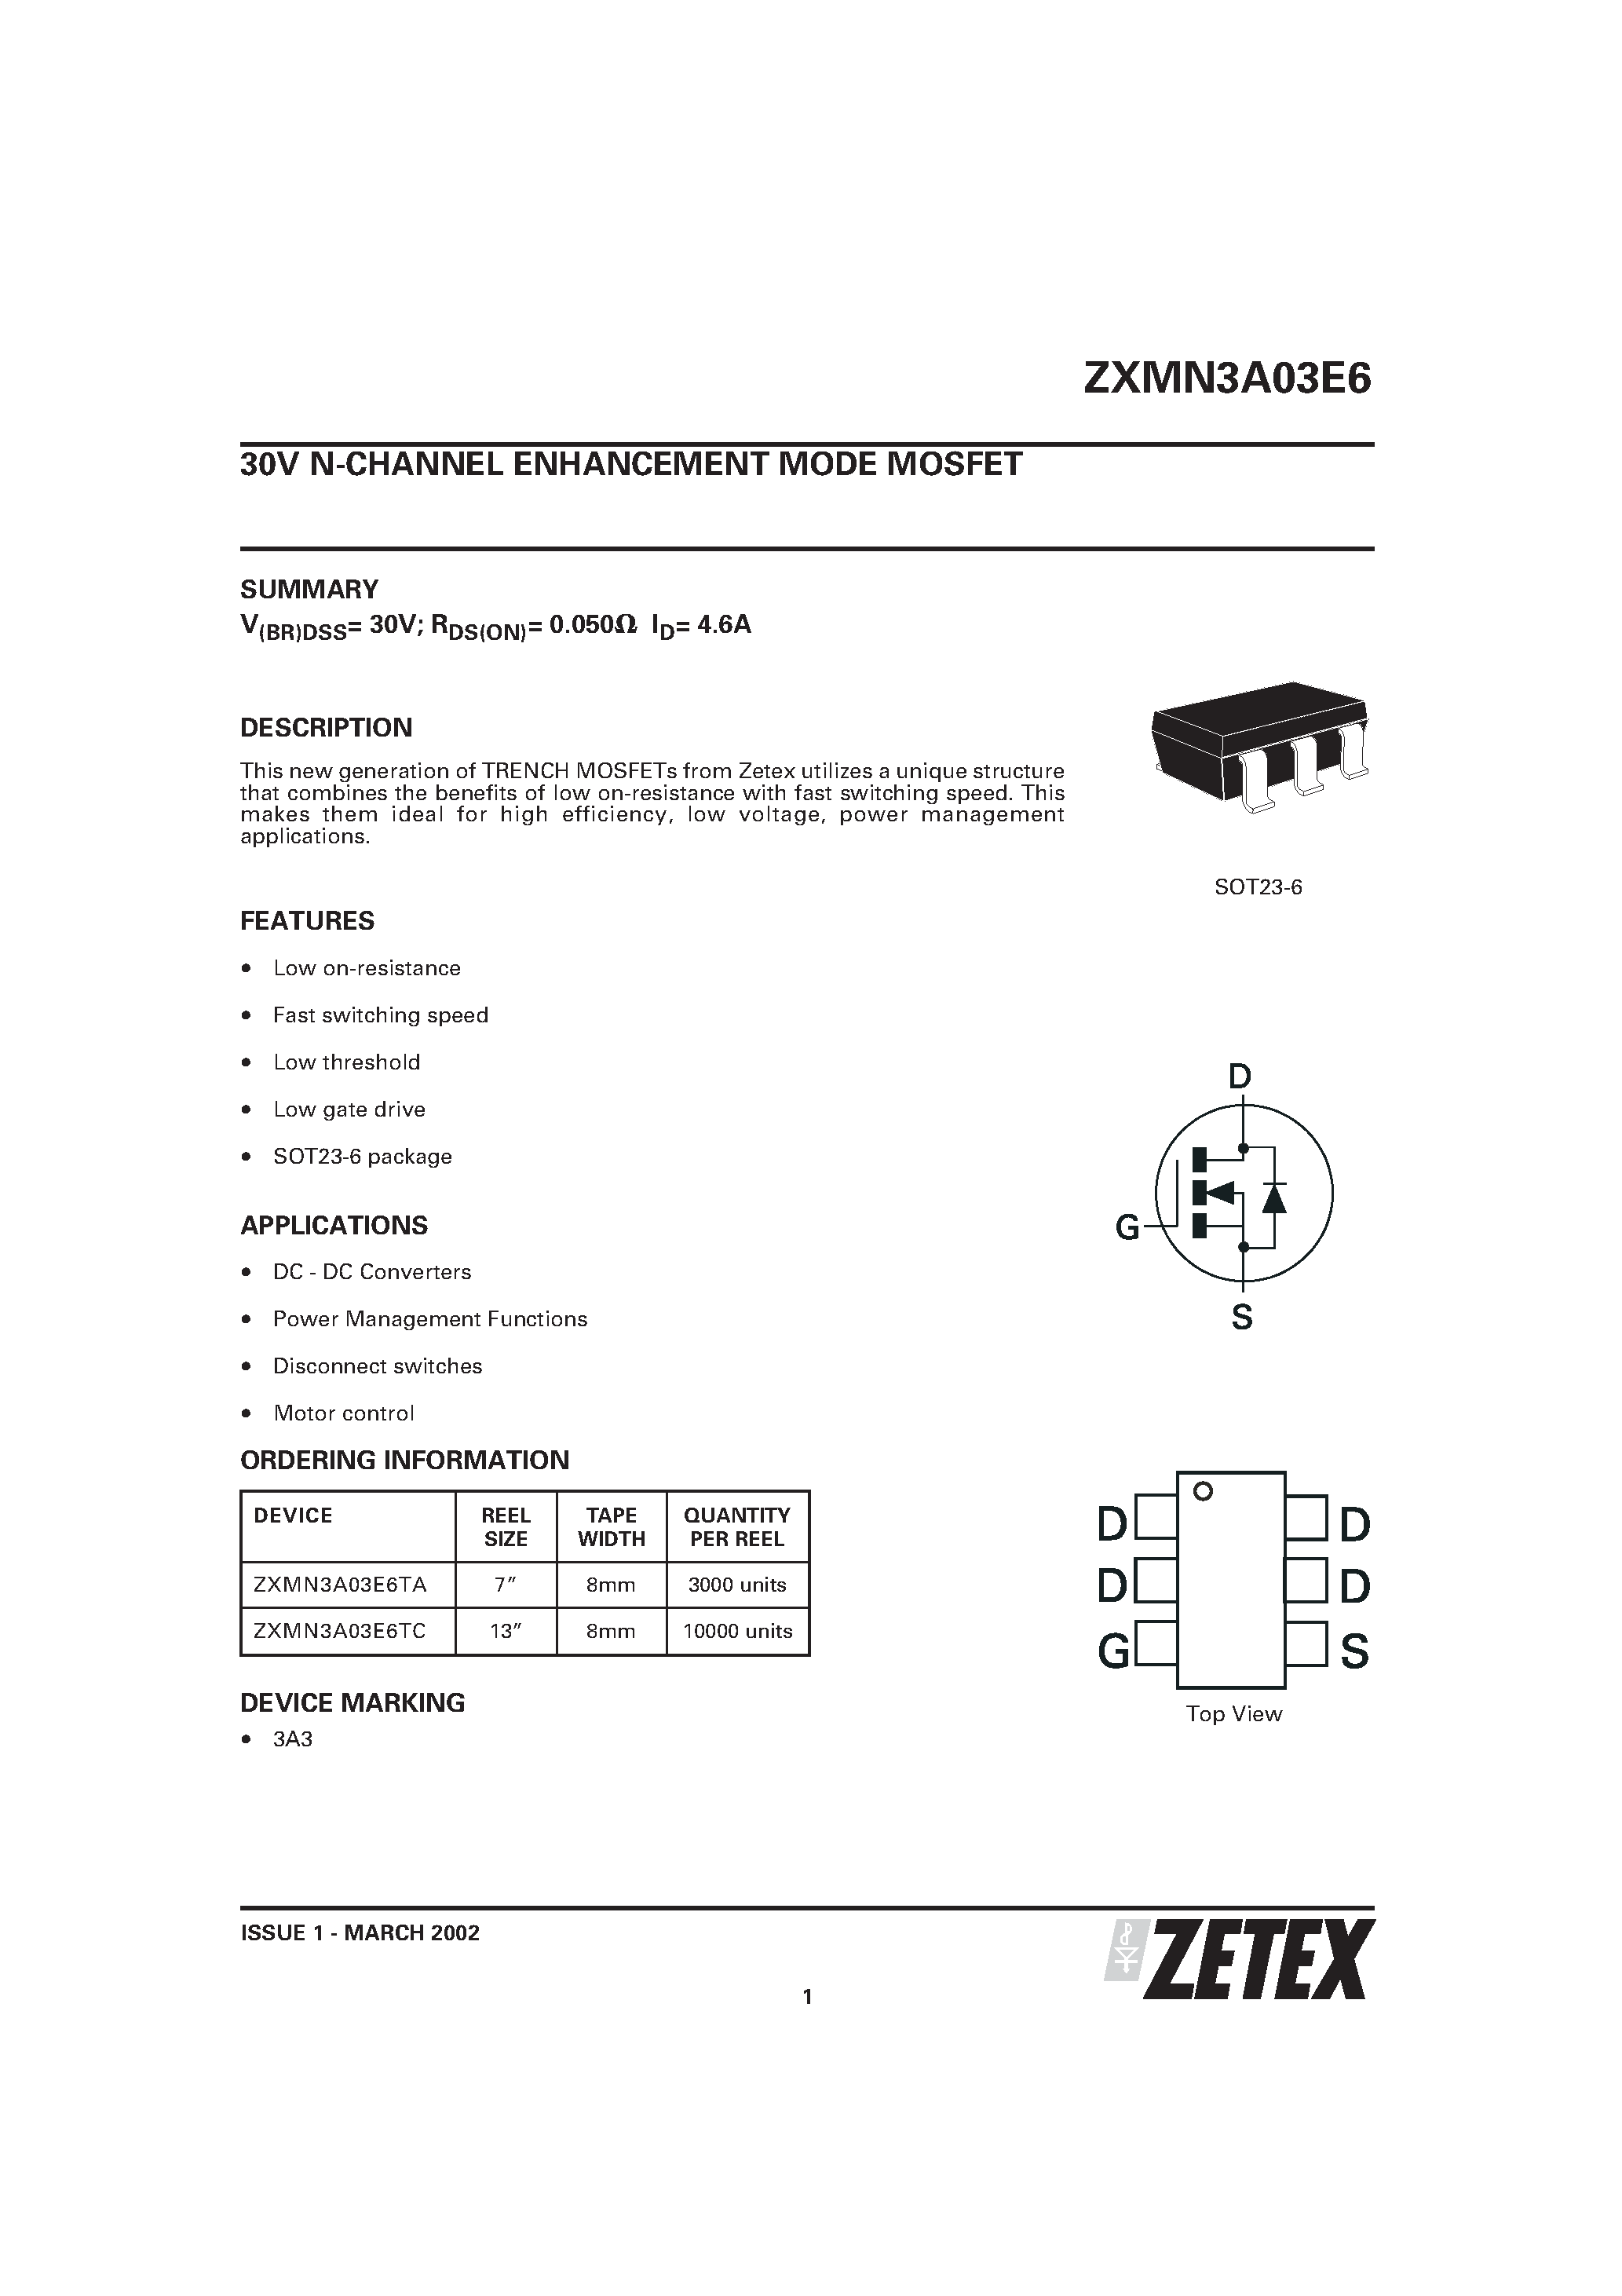 Datasheet ZXMN3A03E6 - 30V N-CHANNEL ENHANCEMENT MODE MOSFET page 1